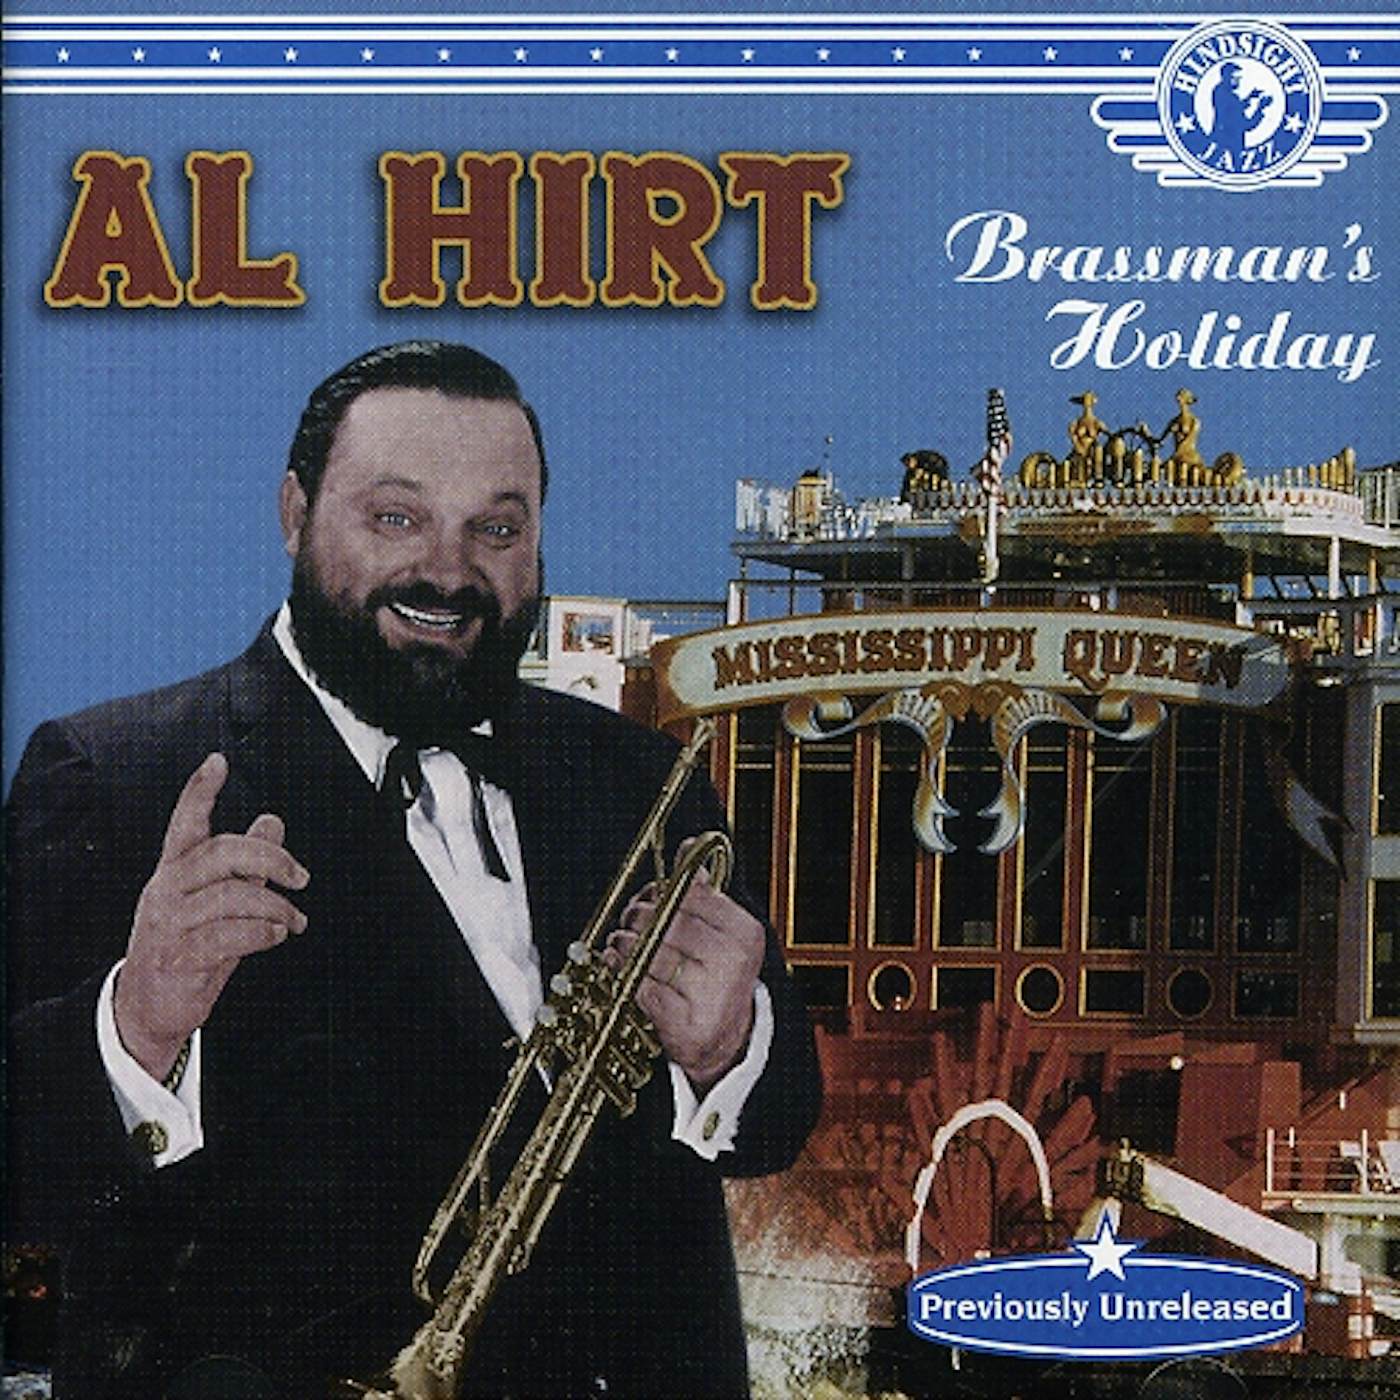 Al Hirt BRASSMAN'S HOLIDAY CD